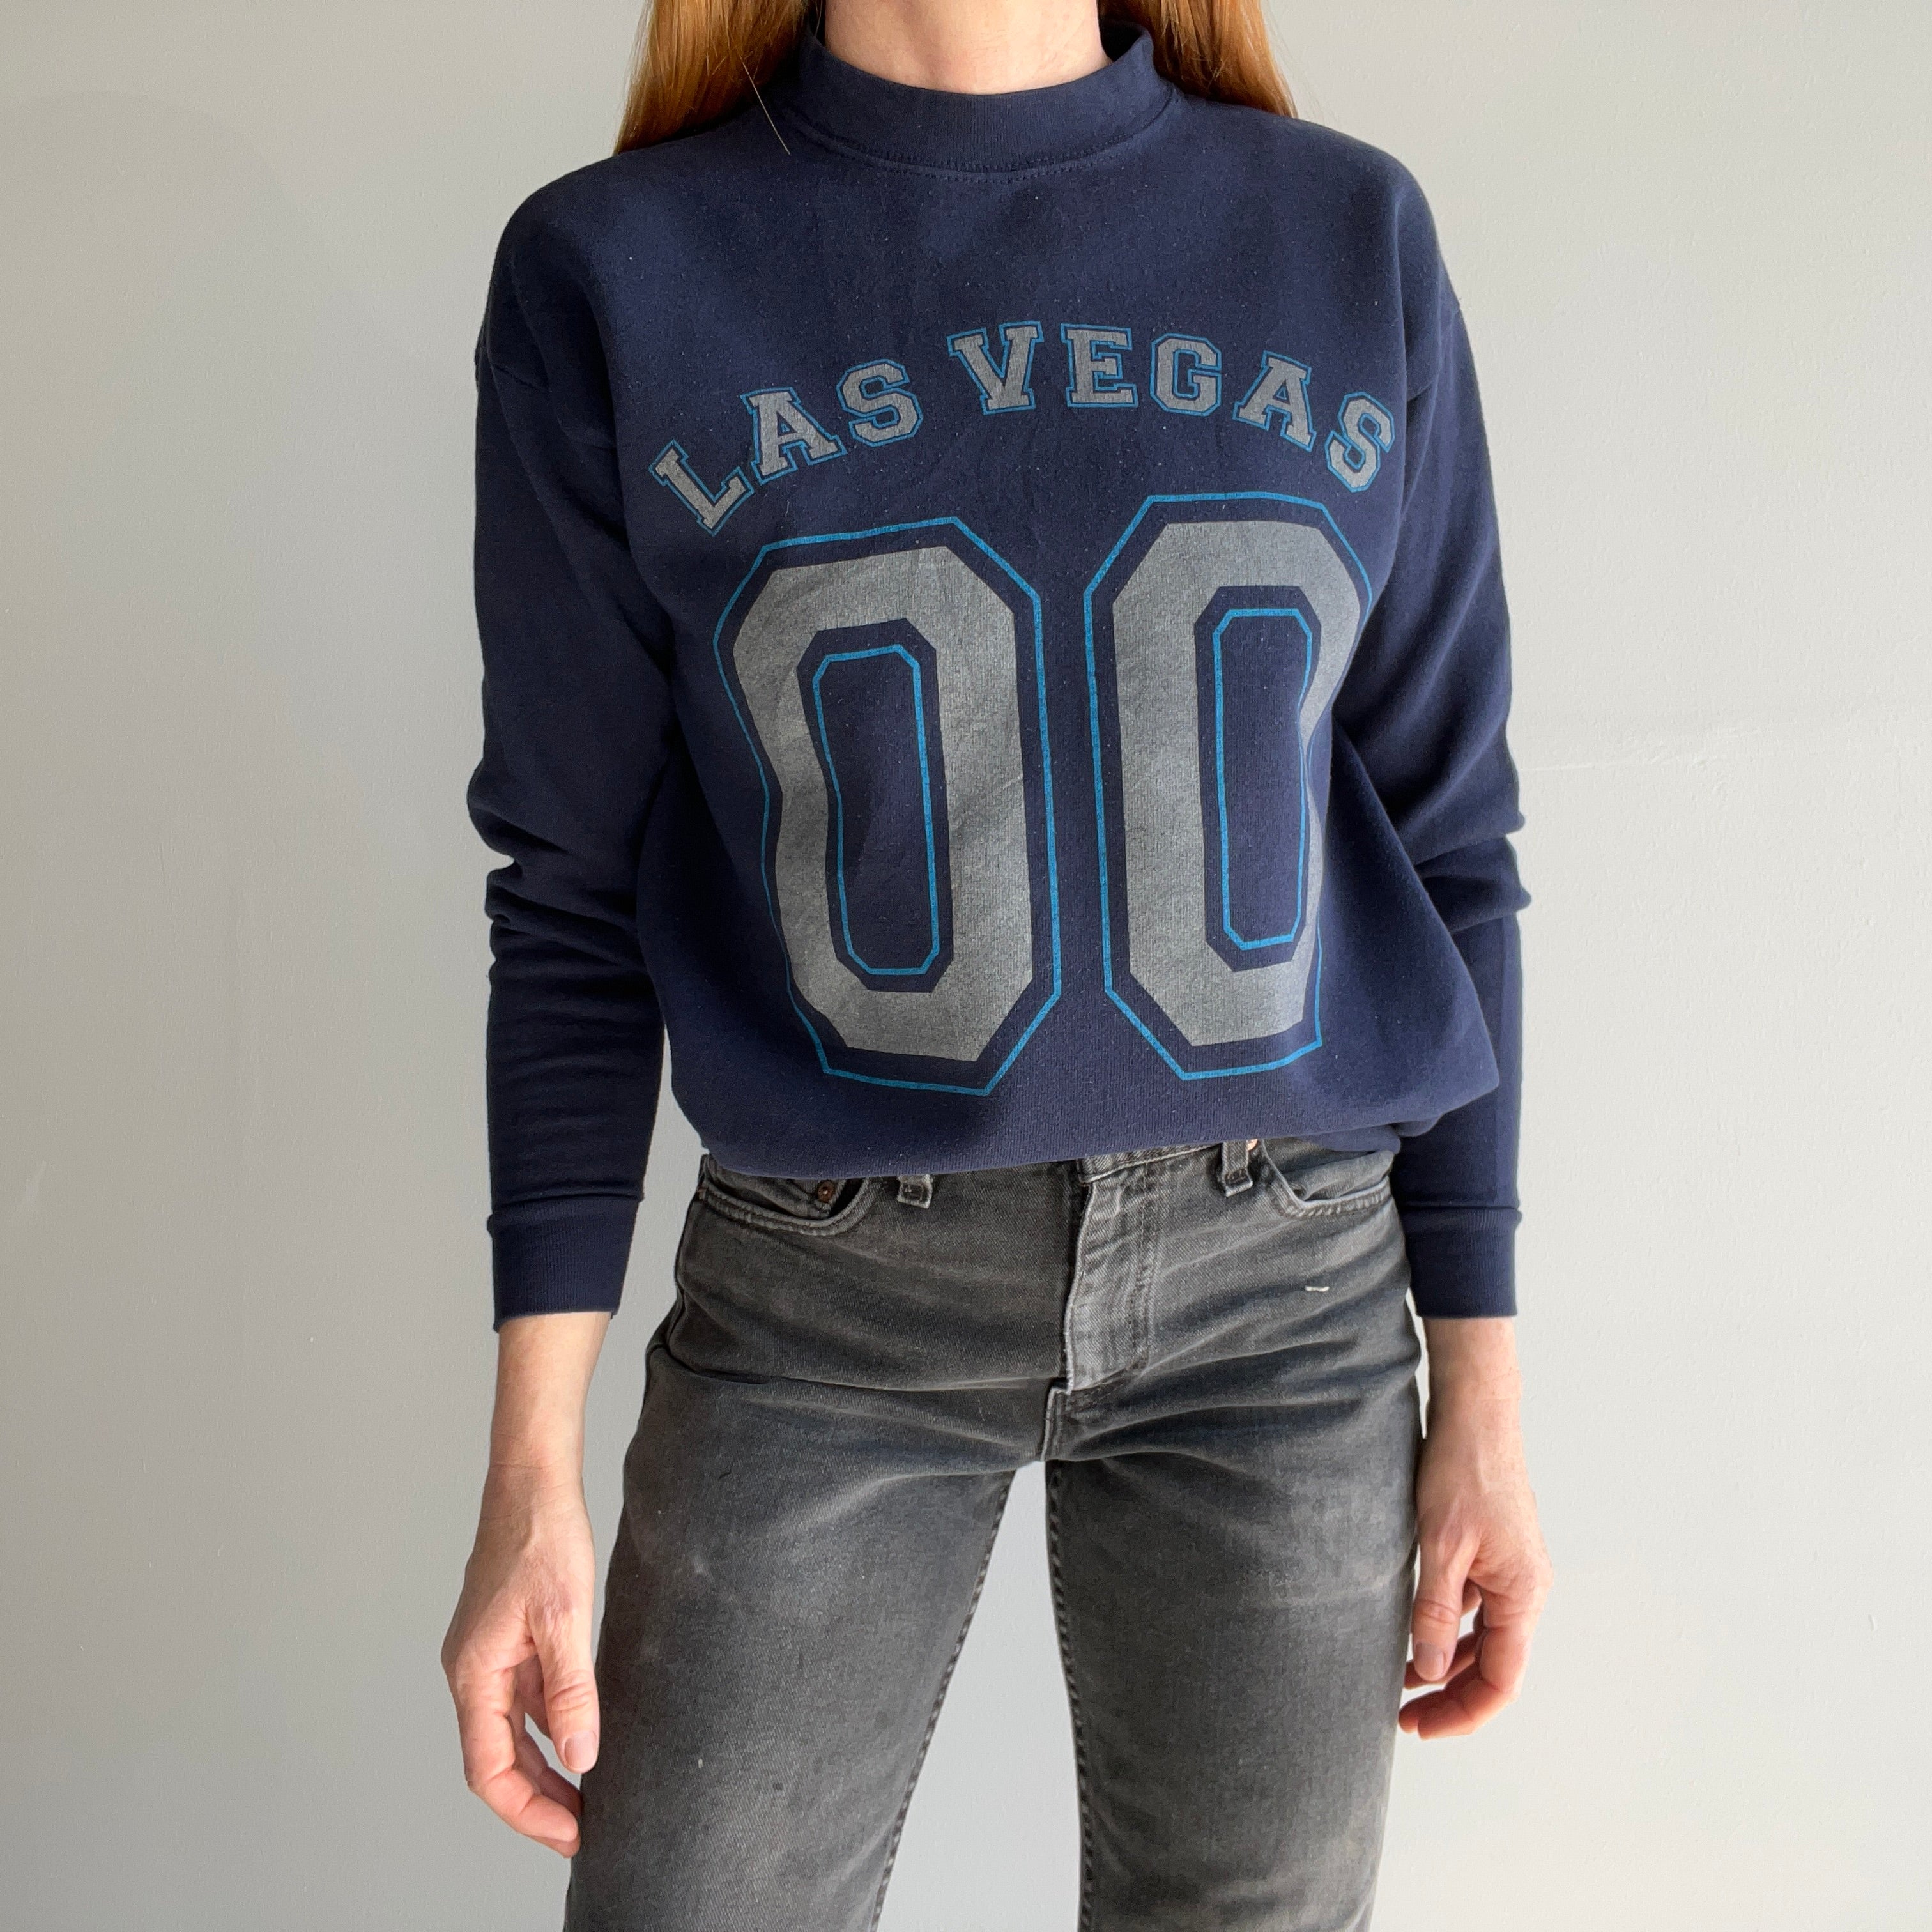 2000 La Vegas Sweatshirt